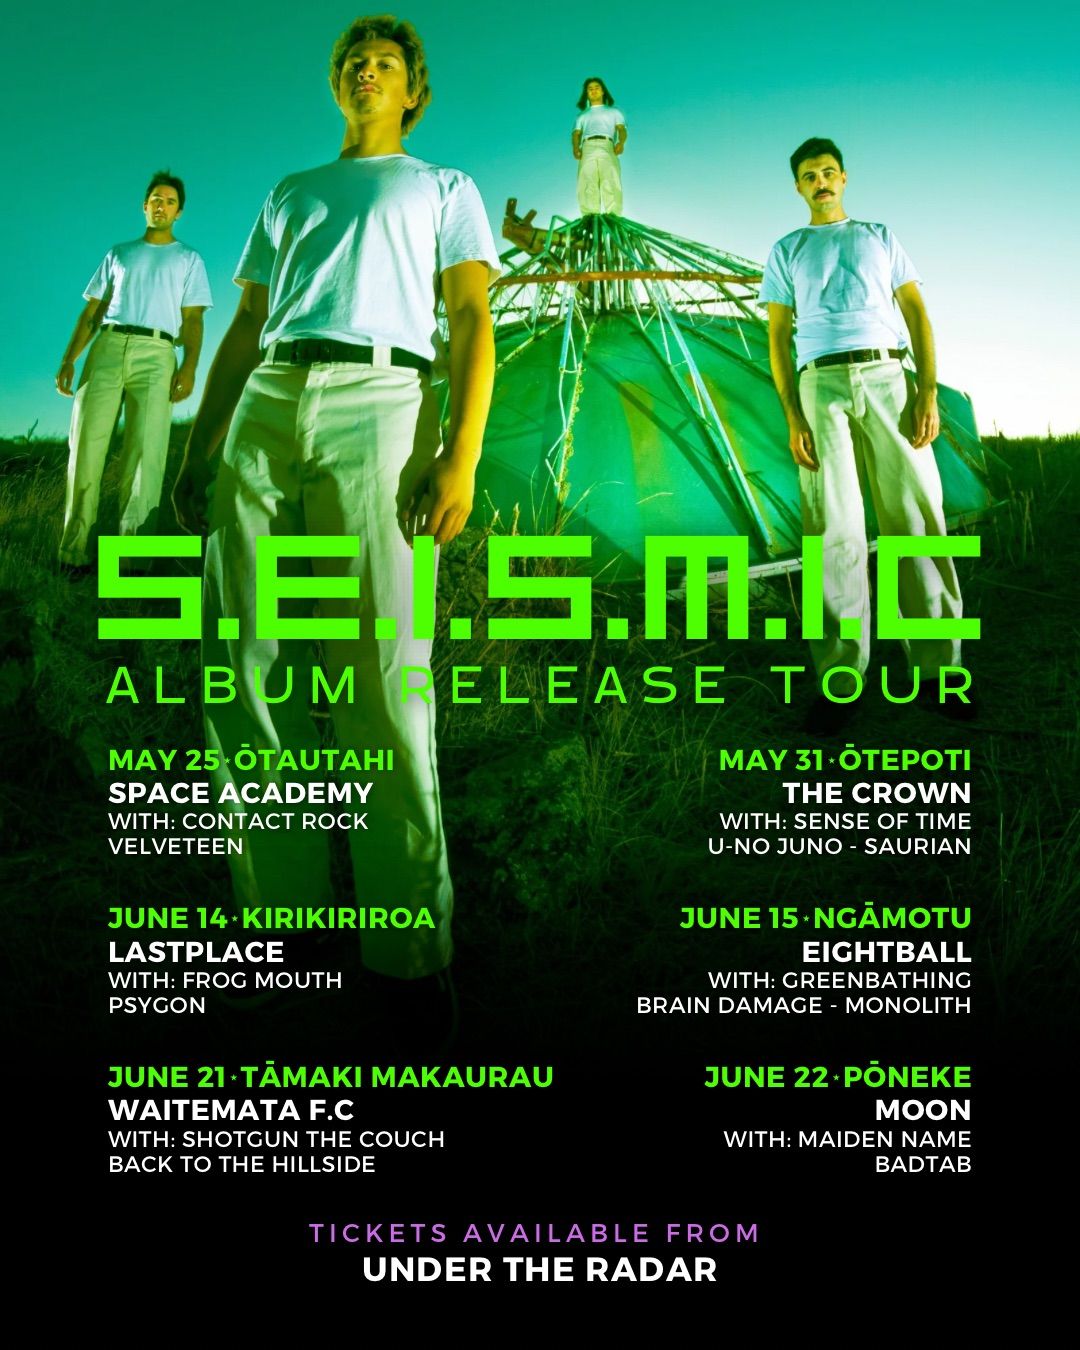 S.E.I.S.M.I.C Album Release Tour - Moon